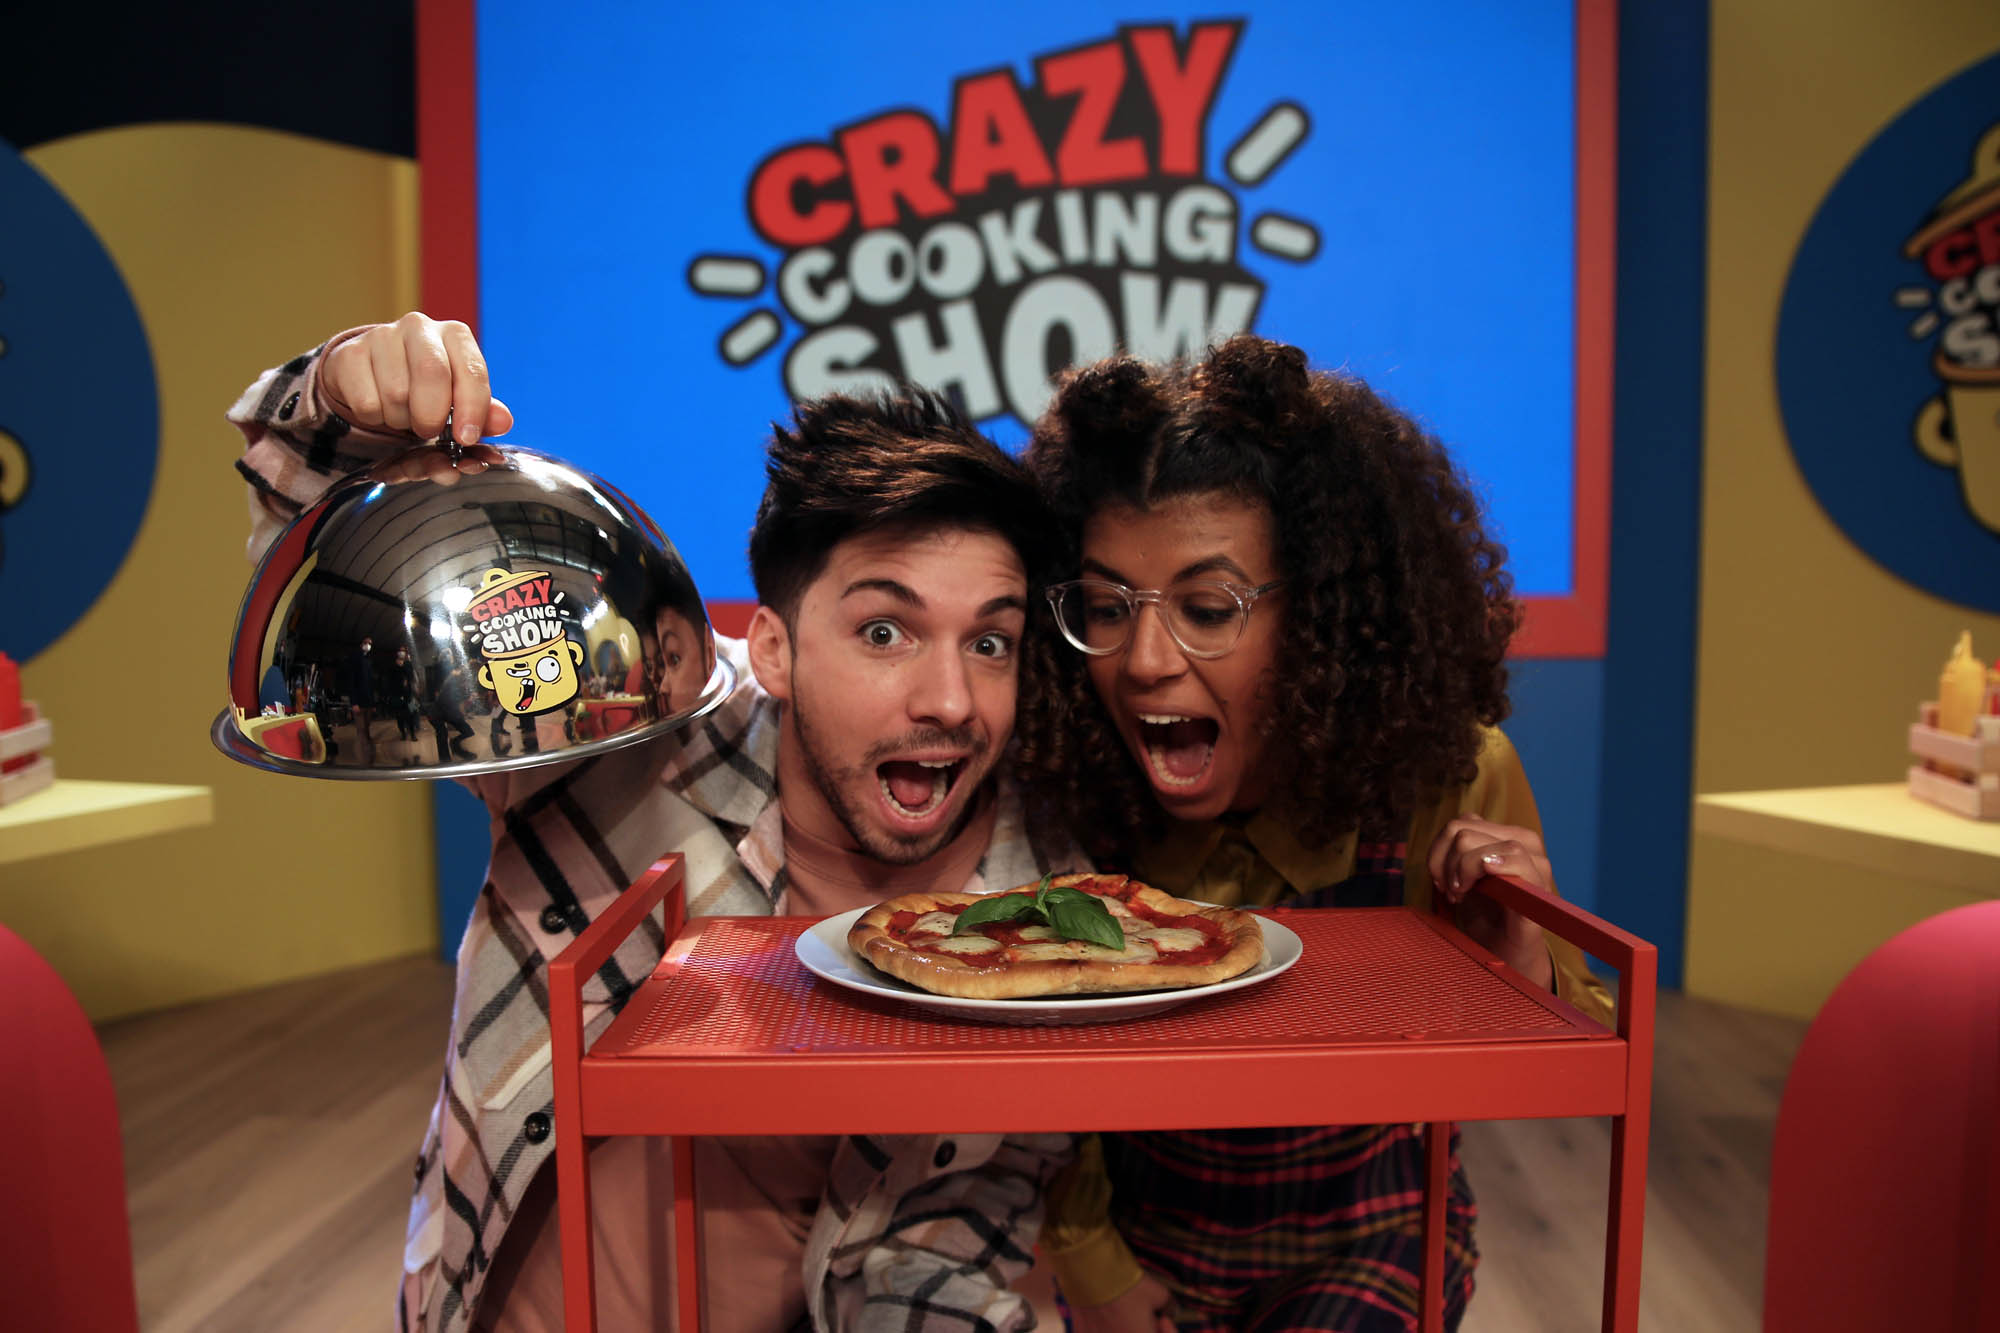 Crazy Cooking Team [credit: courtesy of WarnerMedia]